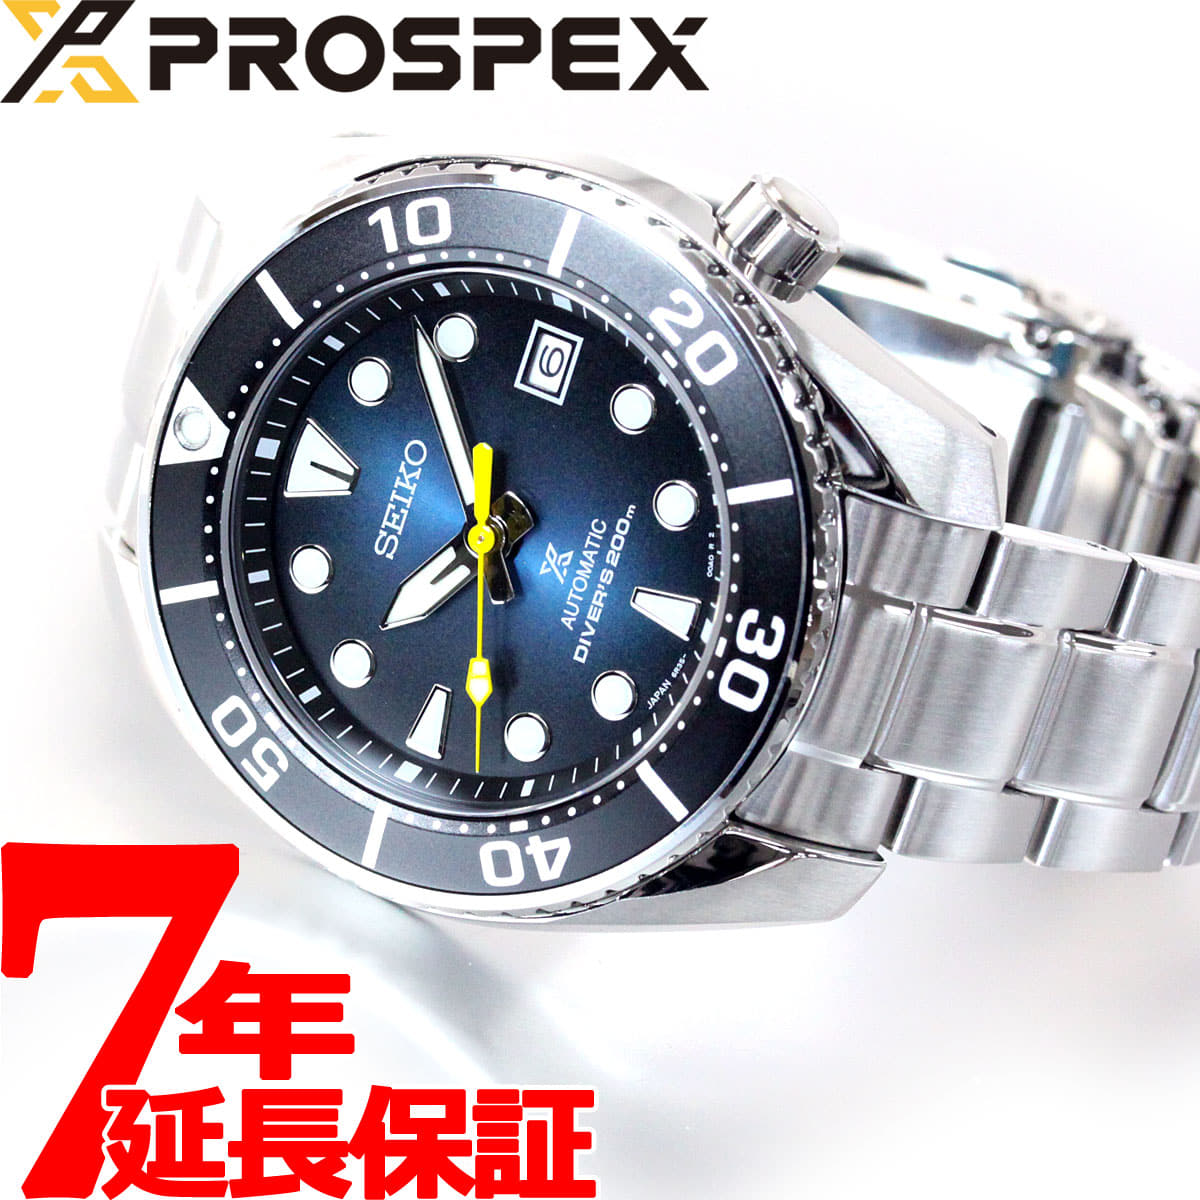 New]SEIKO PROSPEX Diver Scuba SUMO Men's Mechanical Automatic Winding Watch  SBDC099 - BE FORWARD Store